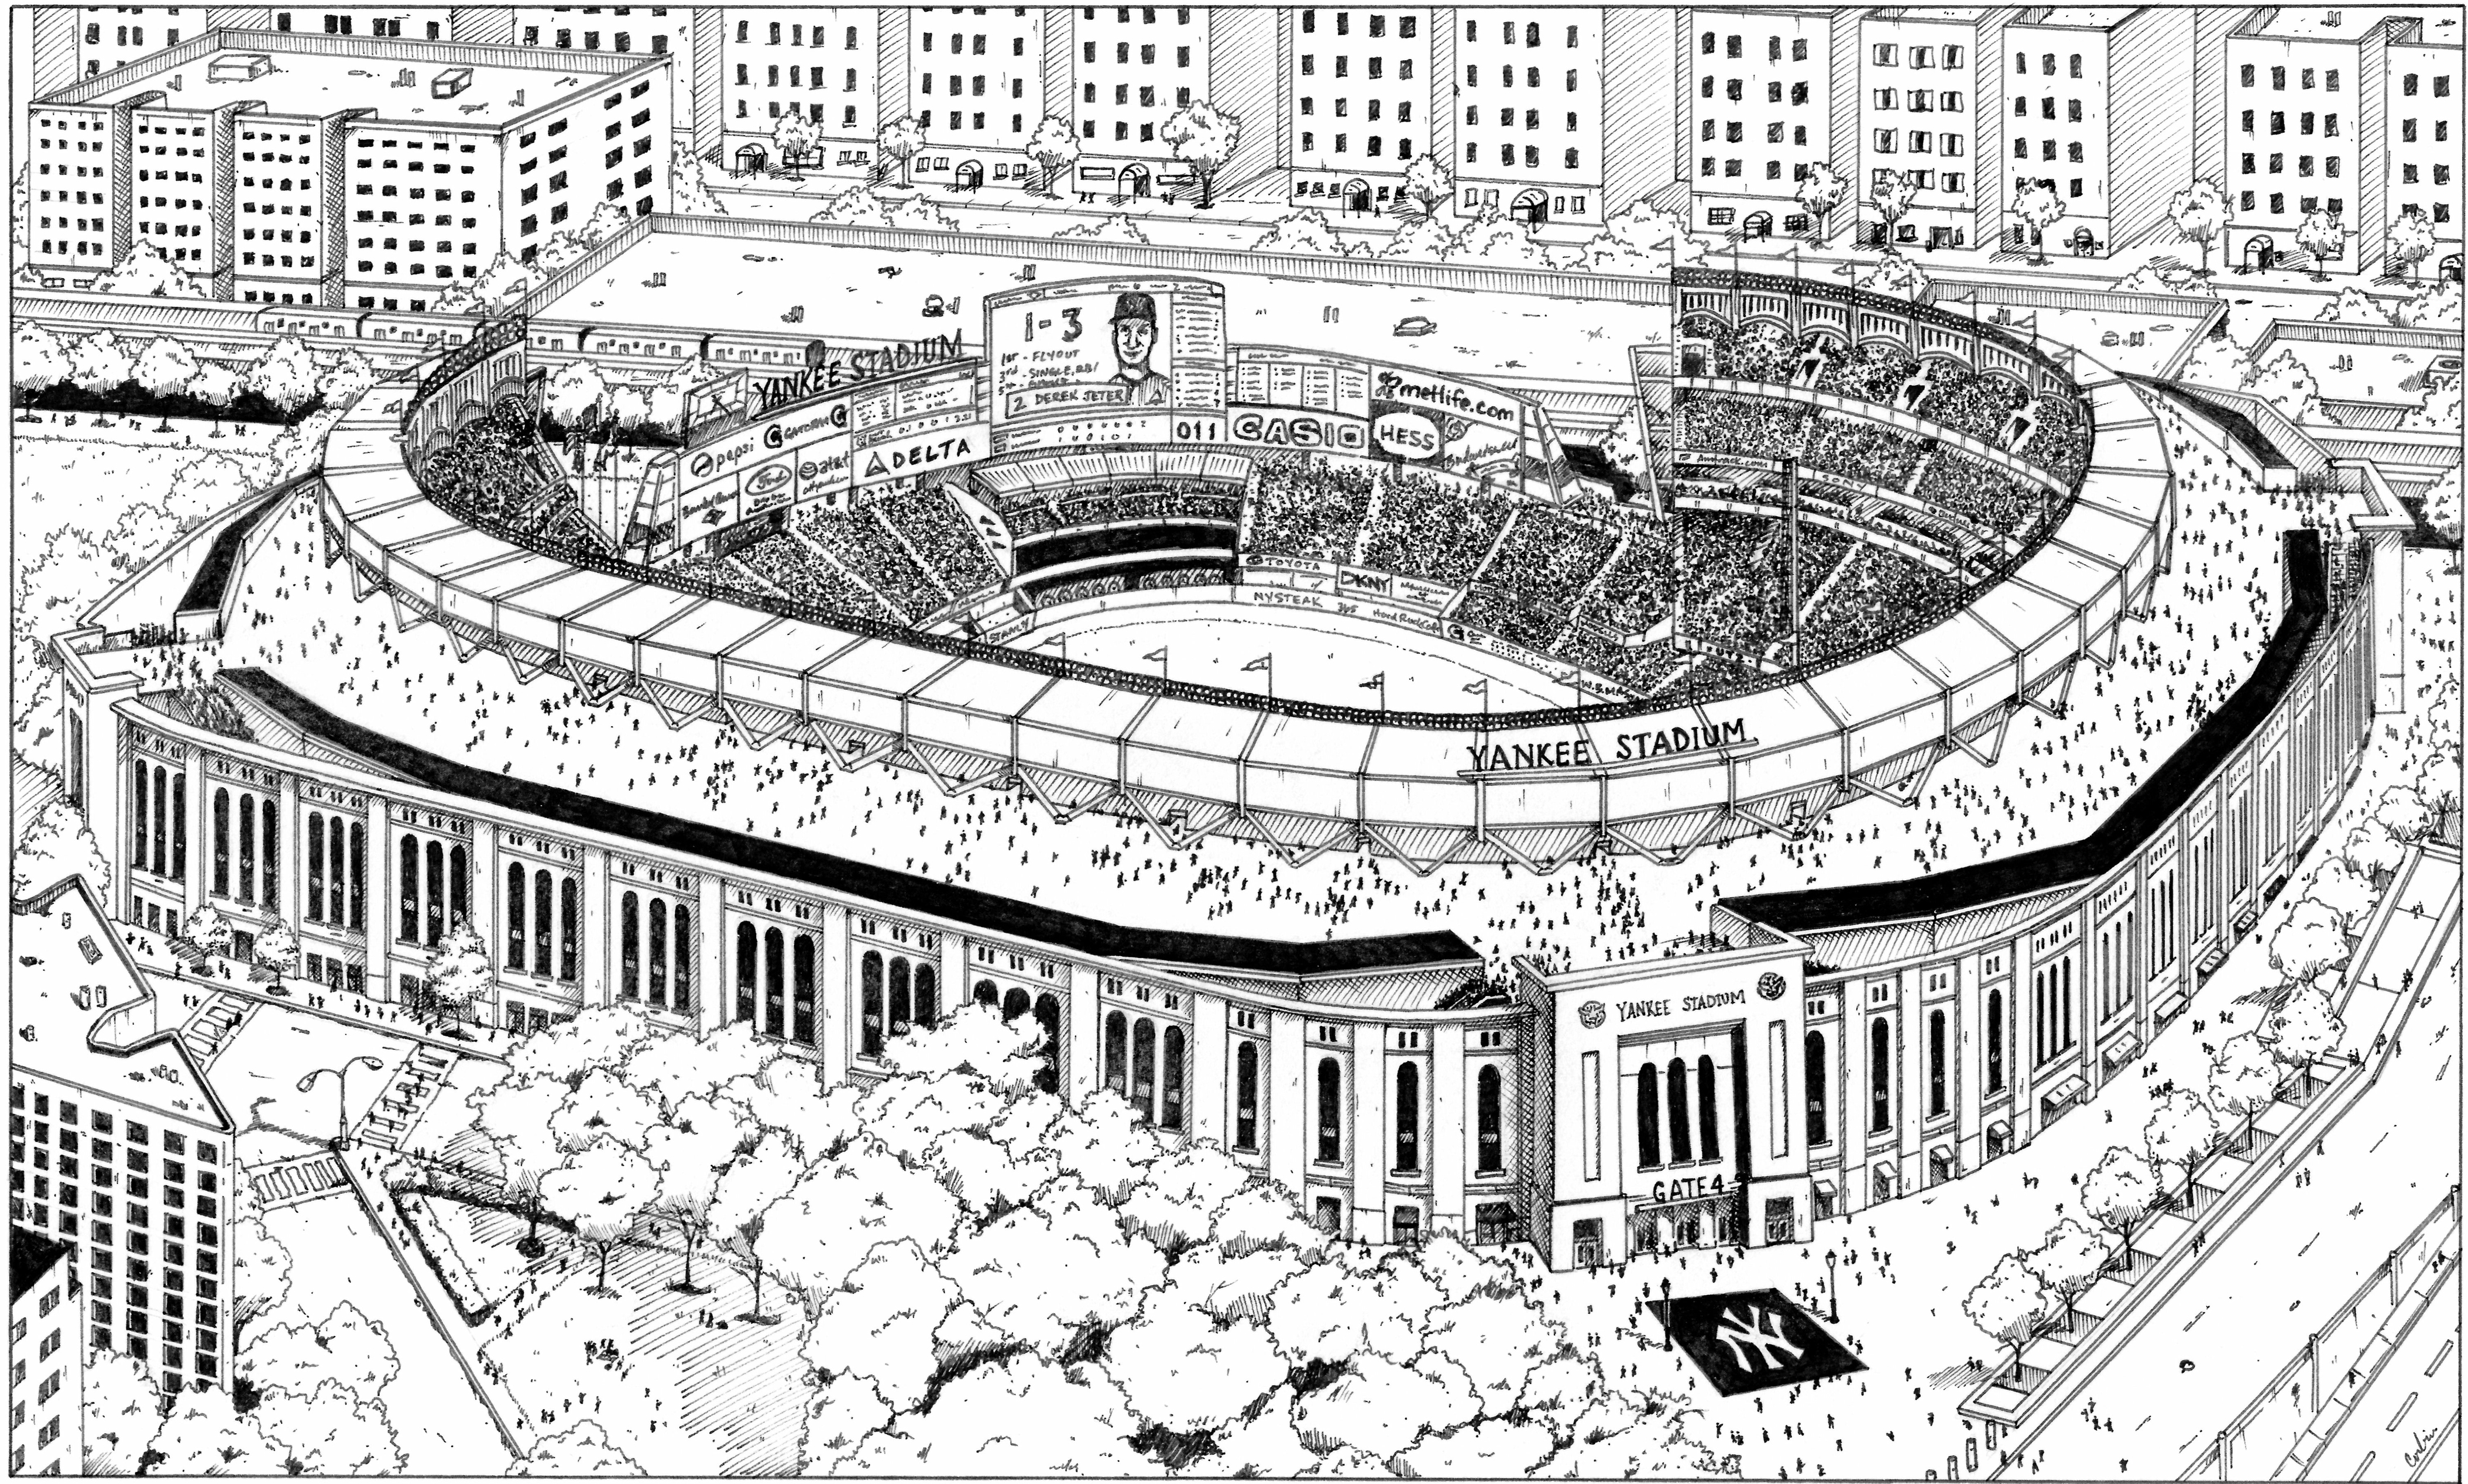 Yankee Stadium in Bronx, NY